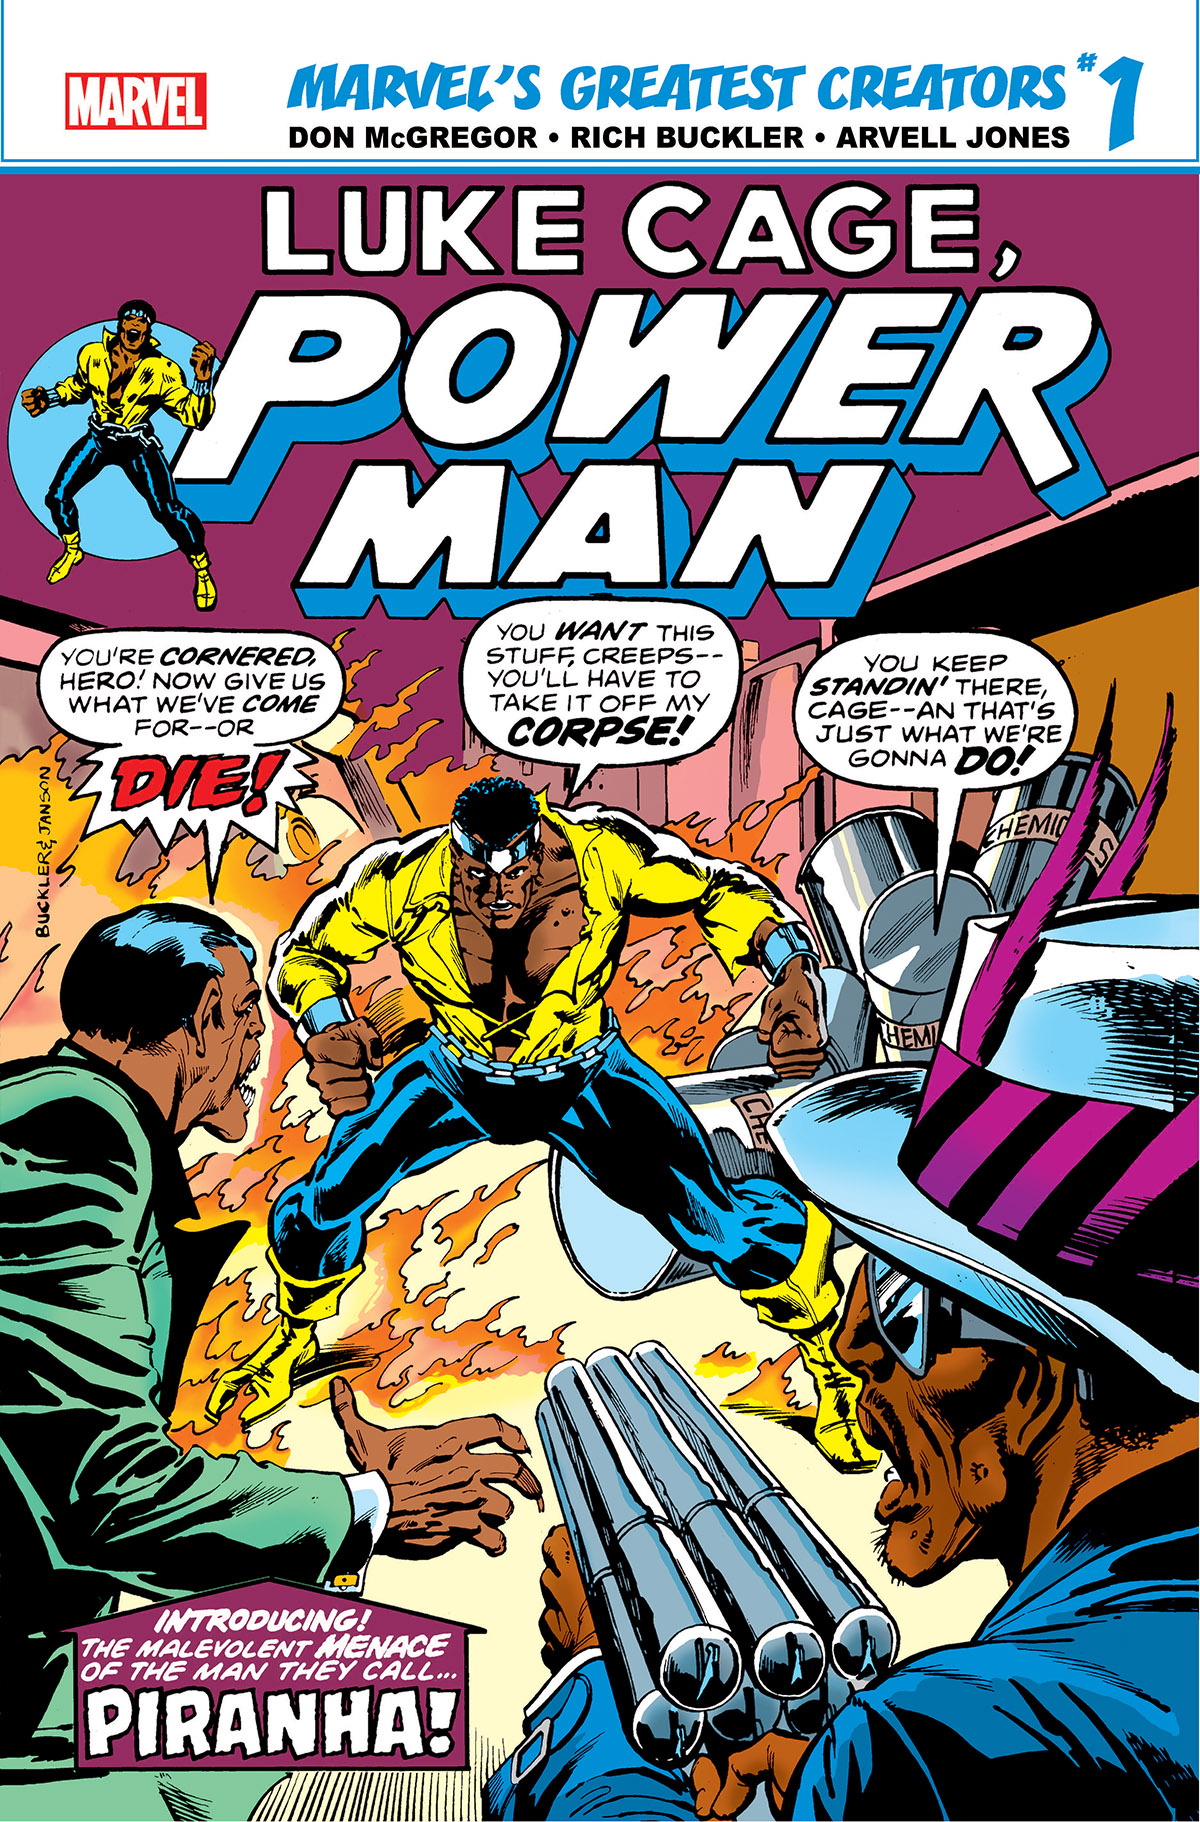 Marvel's Greatest Creators: Luke Cage, Power Man - Piranha! (2019) #1